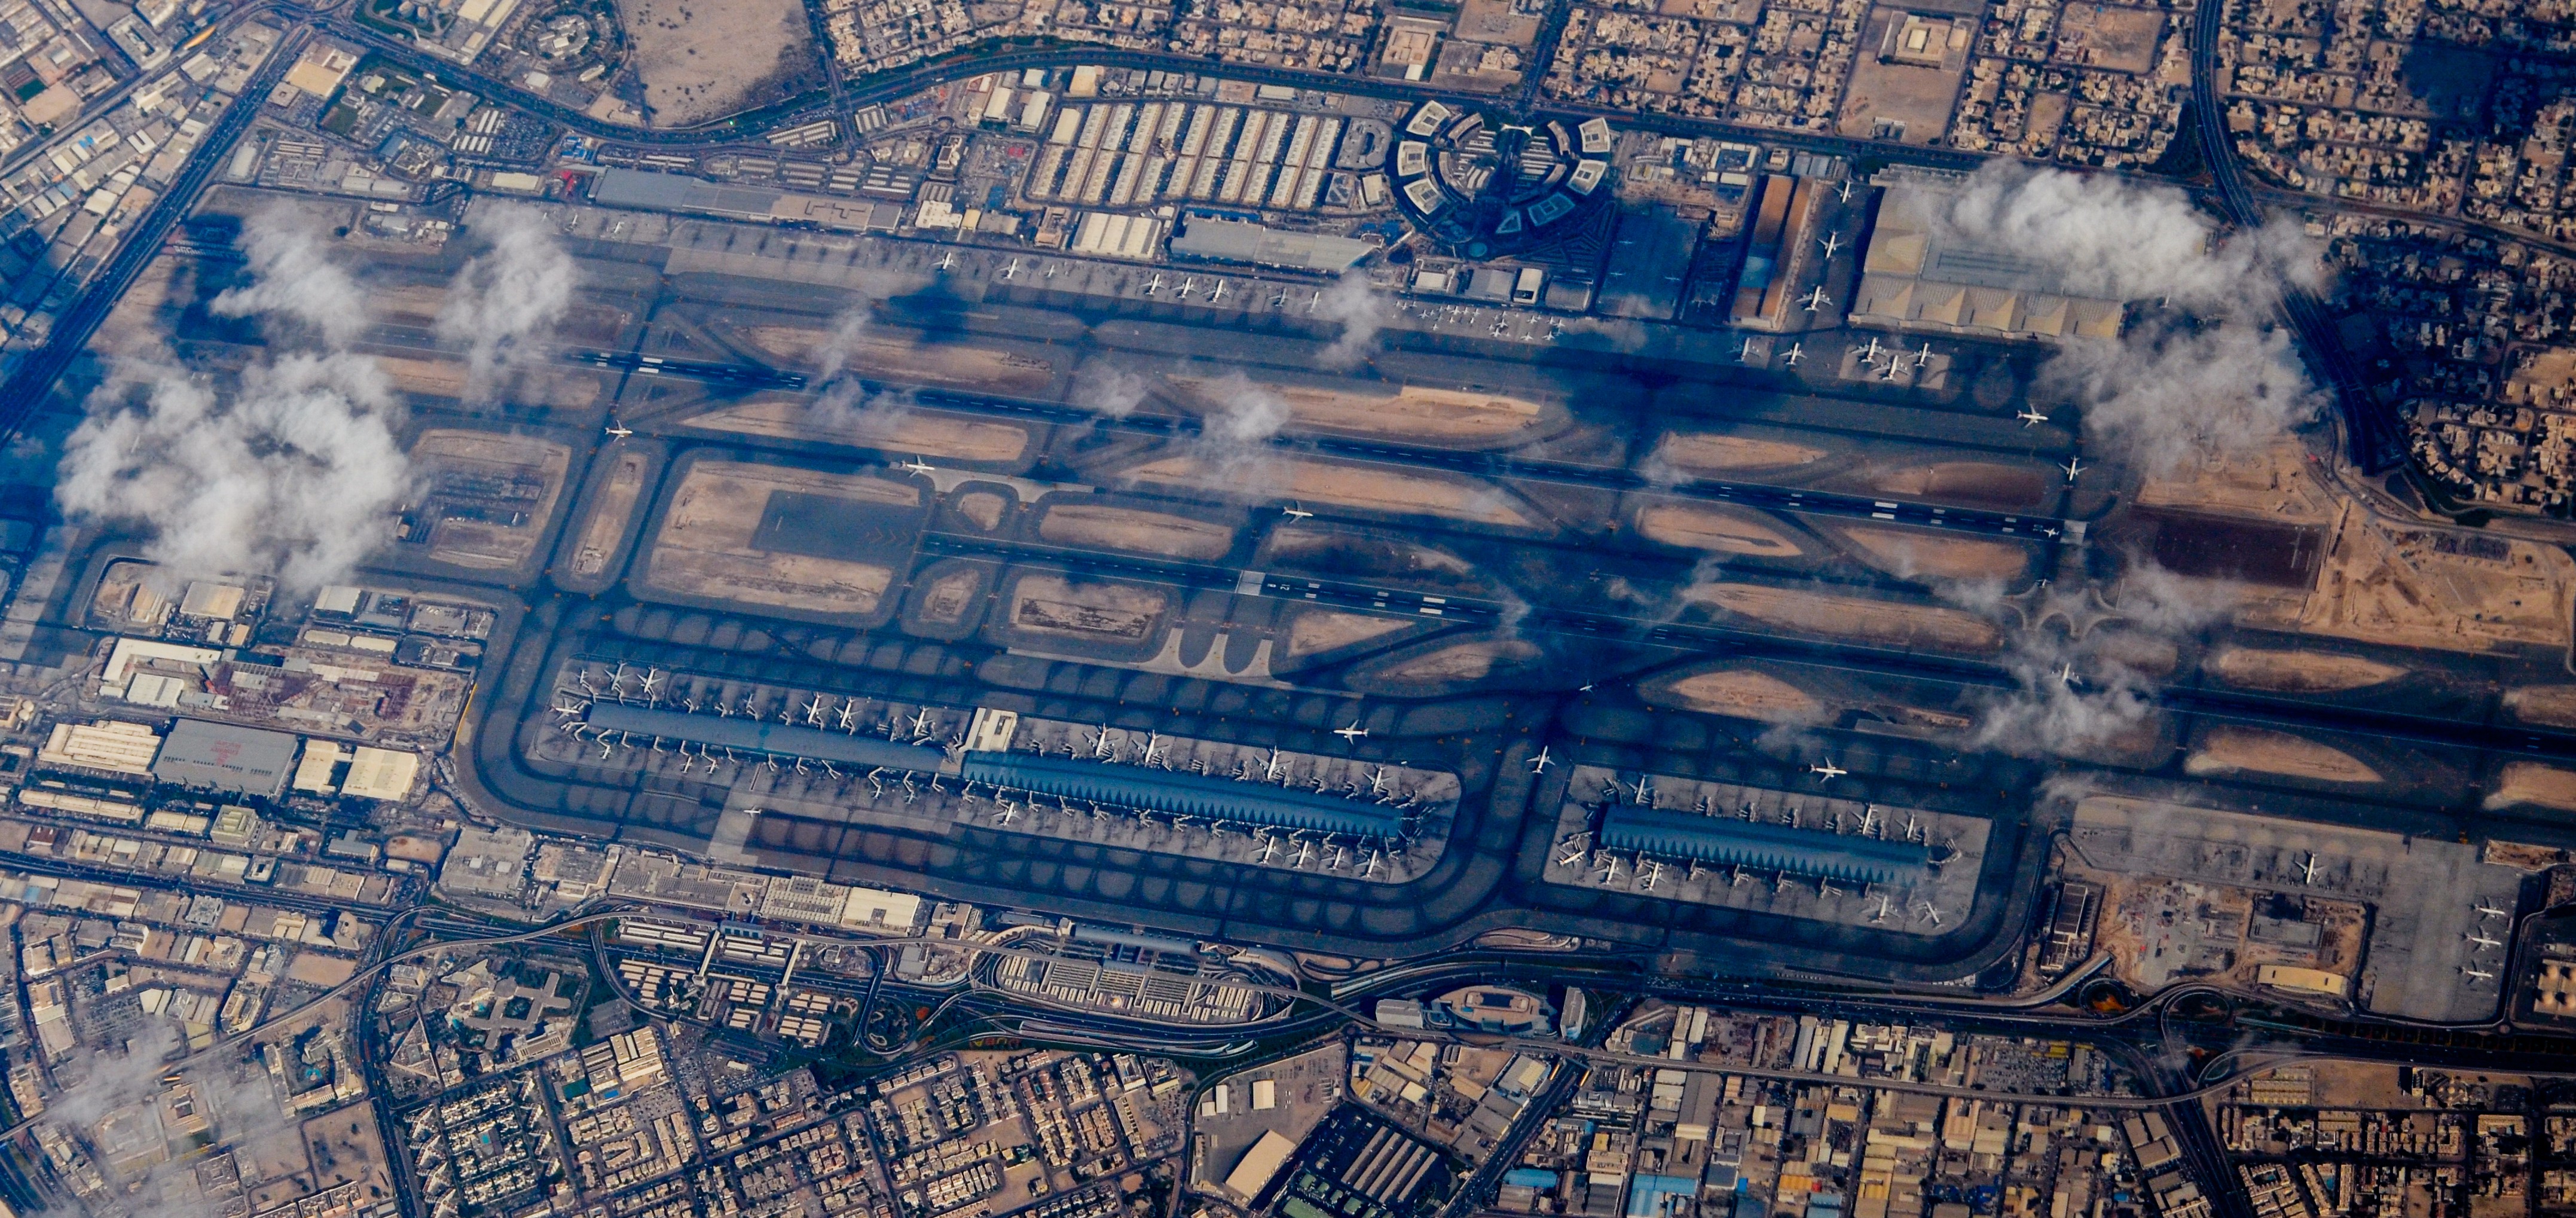 Dubai Airport overview